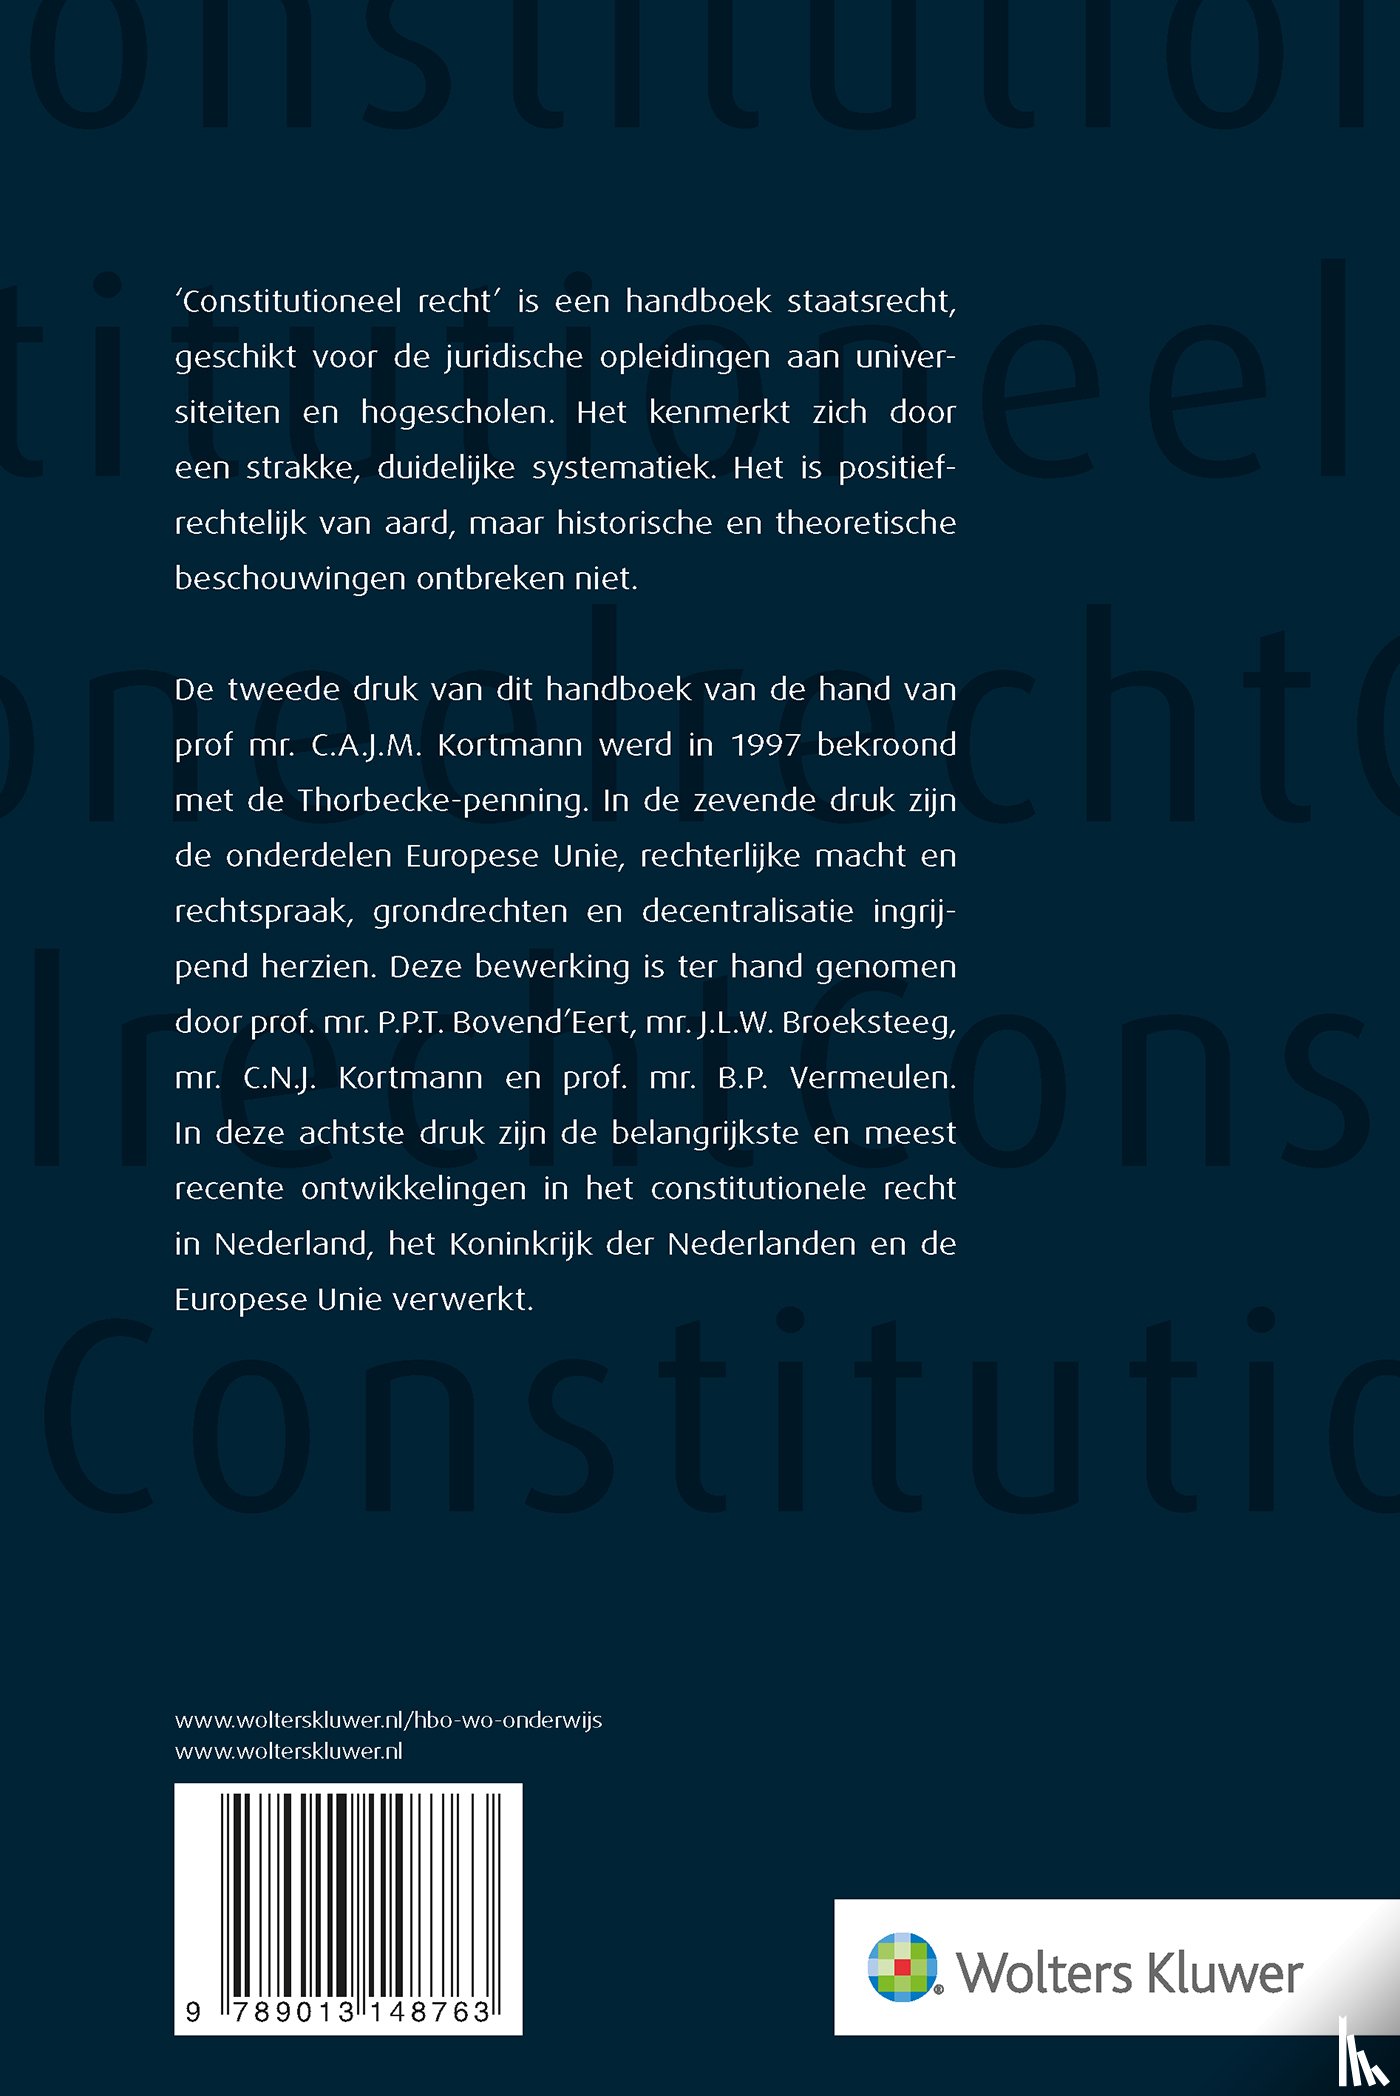 Kortmann, C.A.J.M. - Constitutioneel recht, softcover editie